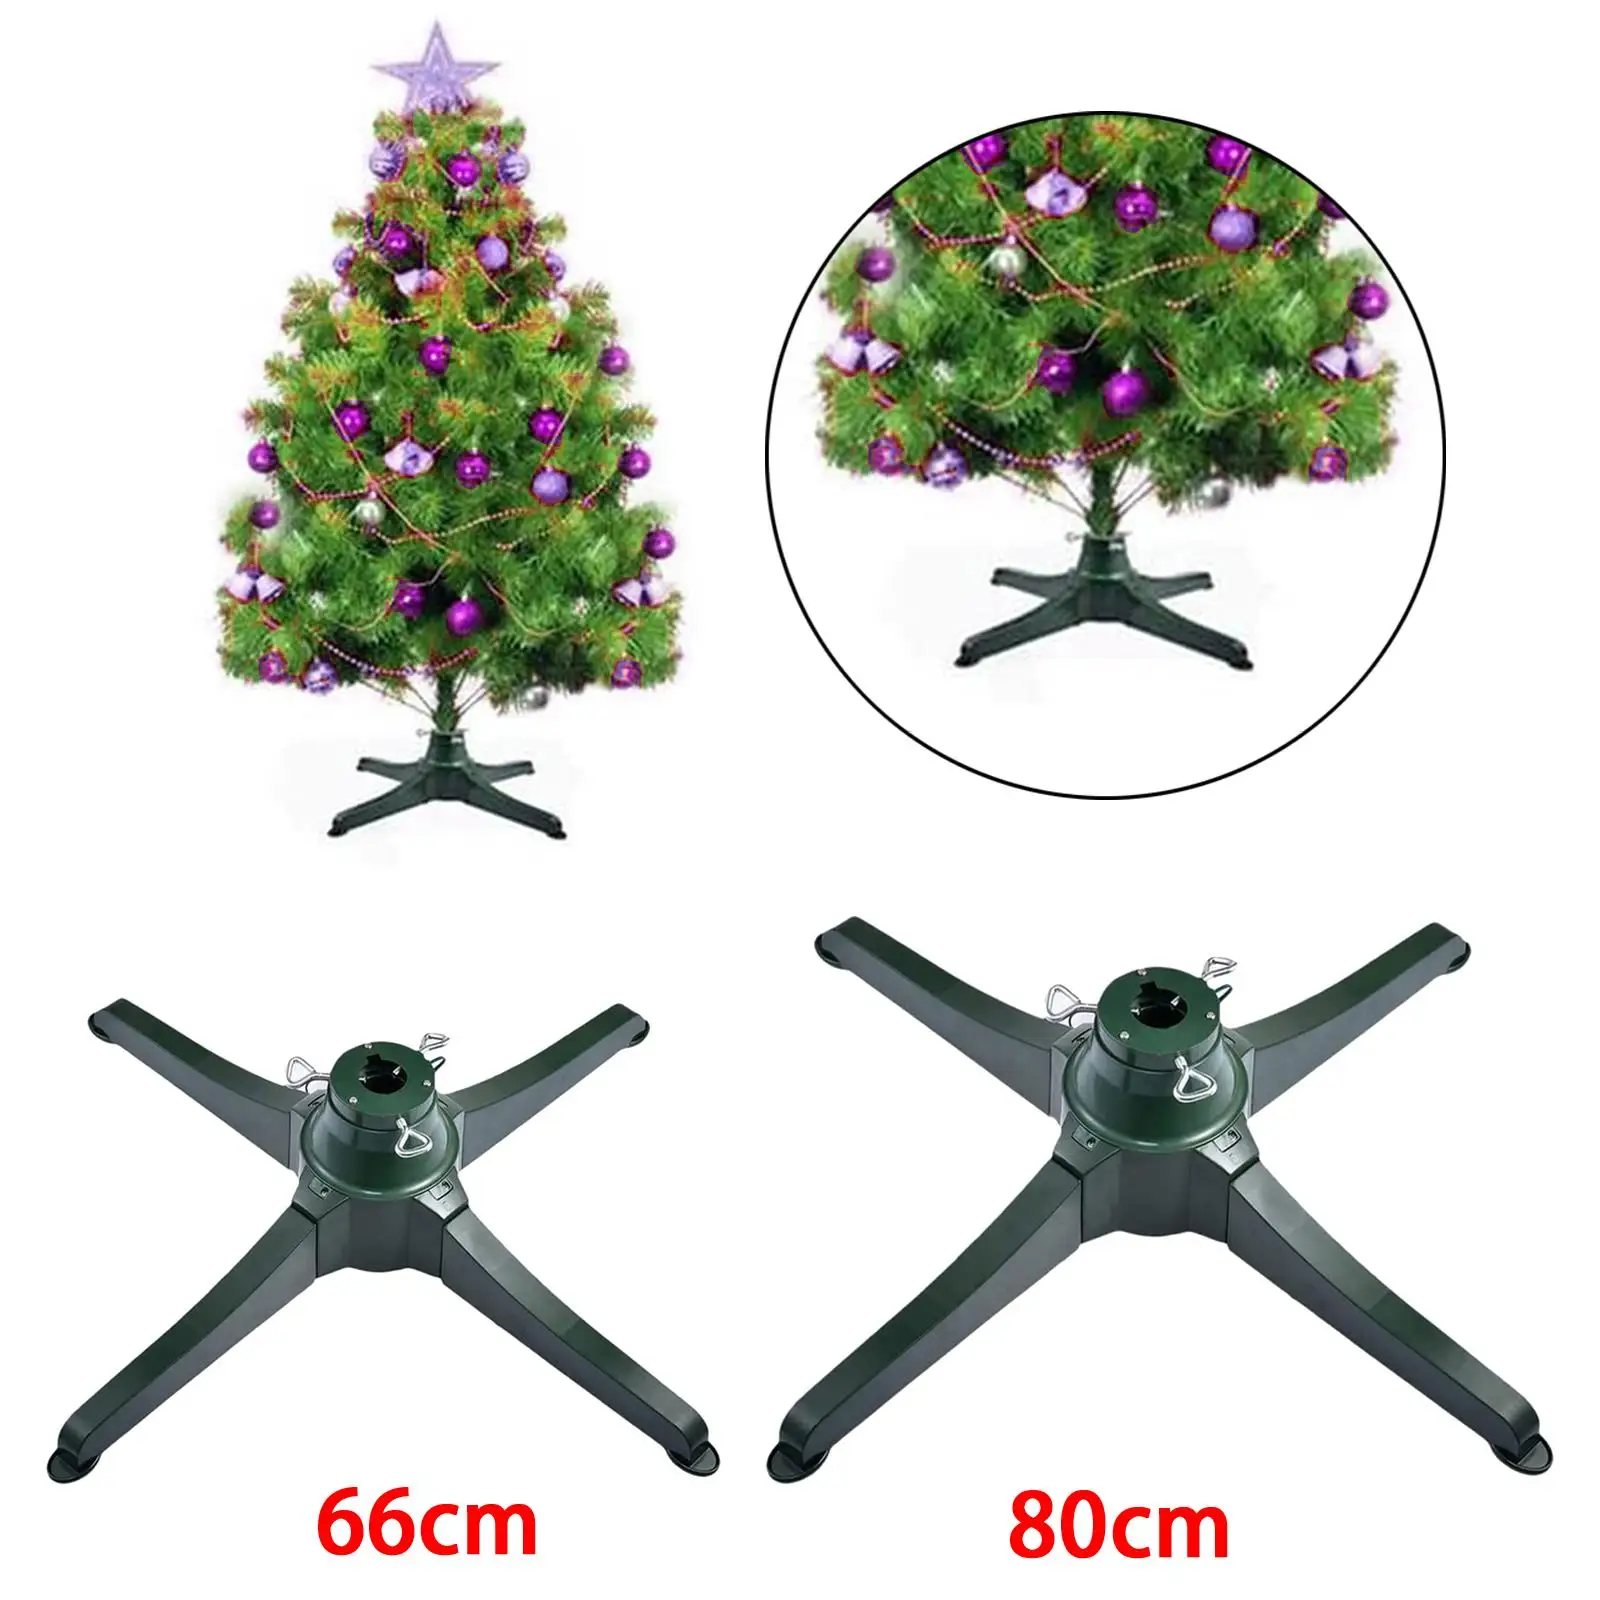 Rotating Christmas Tree Stand Heavyduty Tree Base Holder Bottom Support